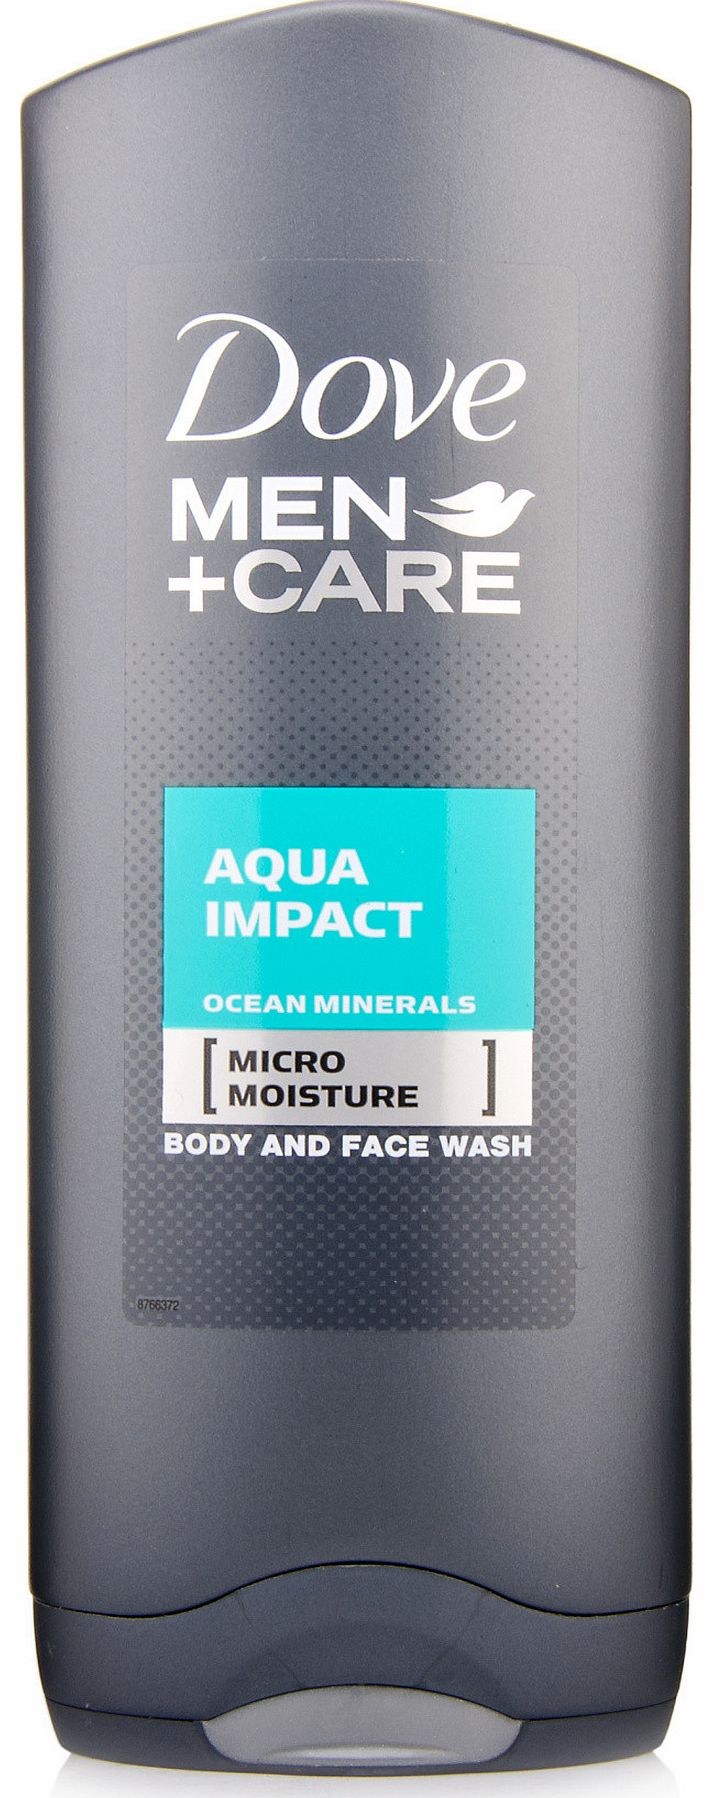 Men+Care Aqua Impact Body and Face Wash